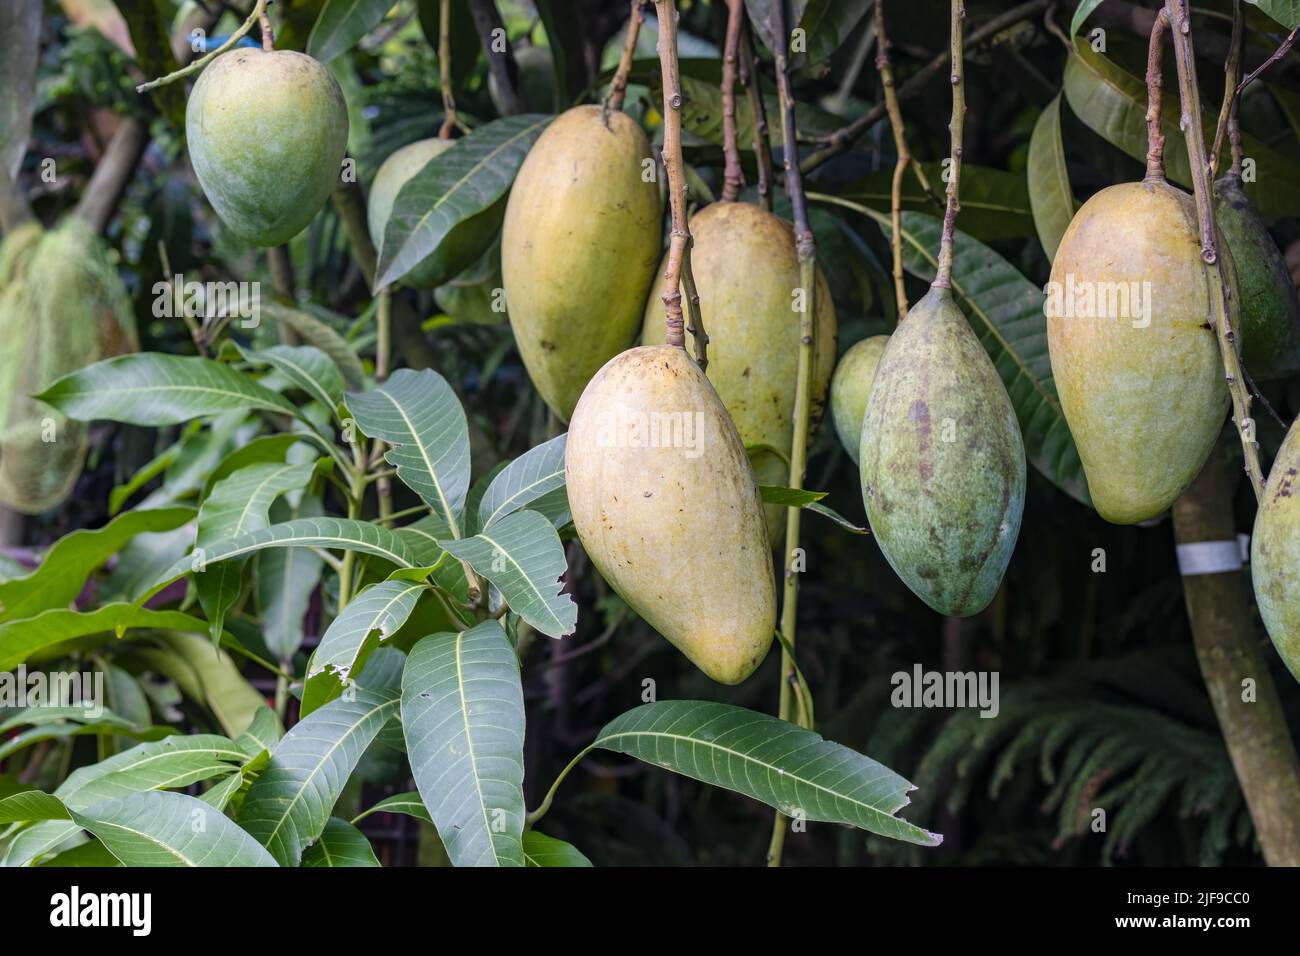 Mango tree with hanging various mangoes close up Stock Photo